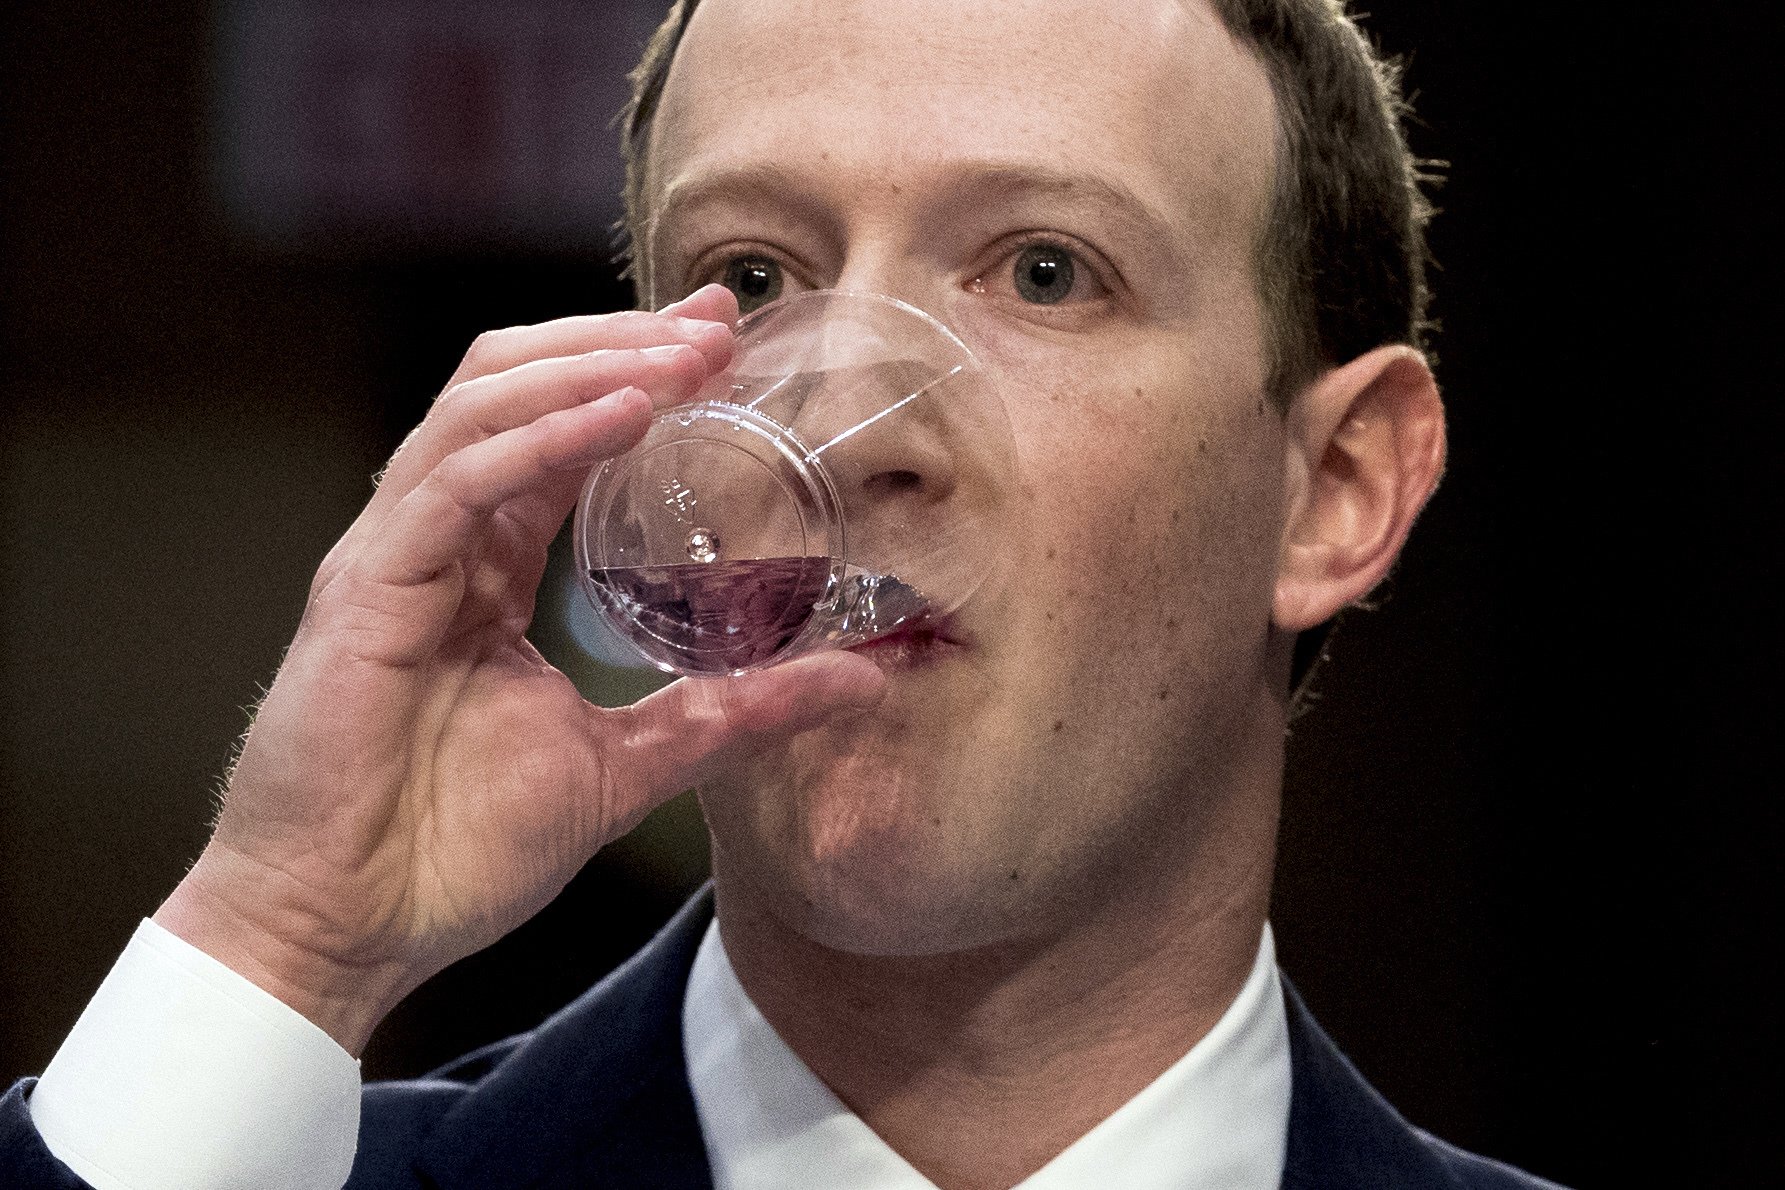 “Is Mark Zuckerberg wet or dry? https://t.co/L9fCMNzwkD” .